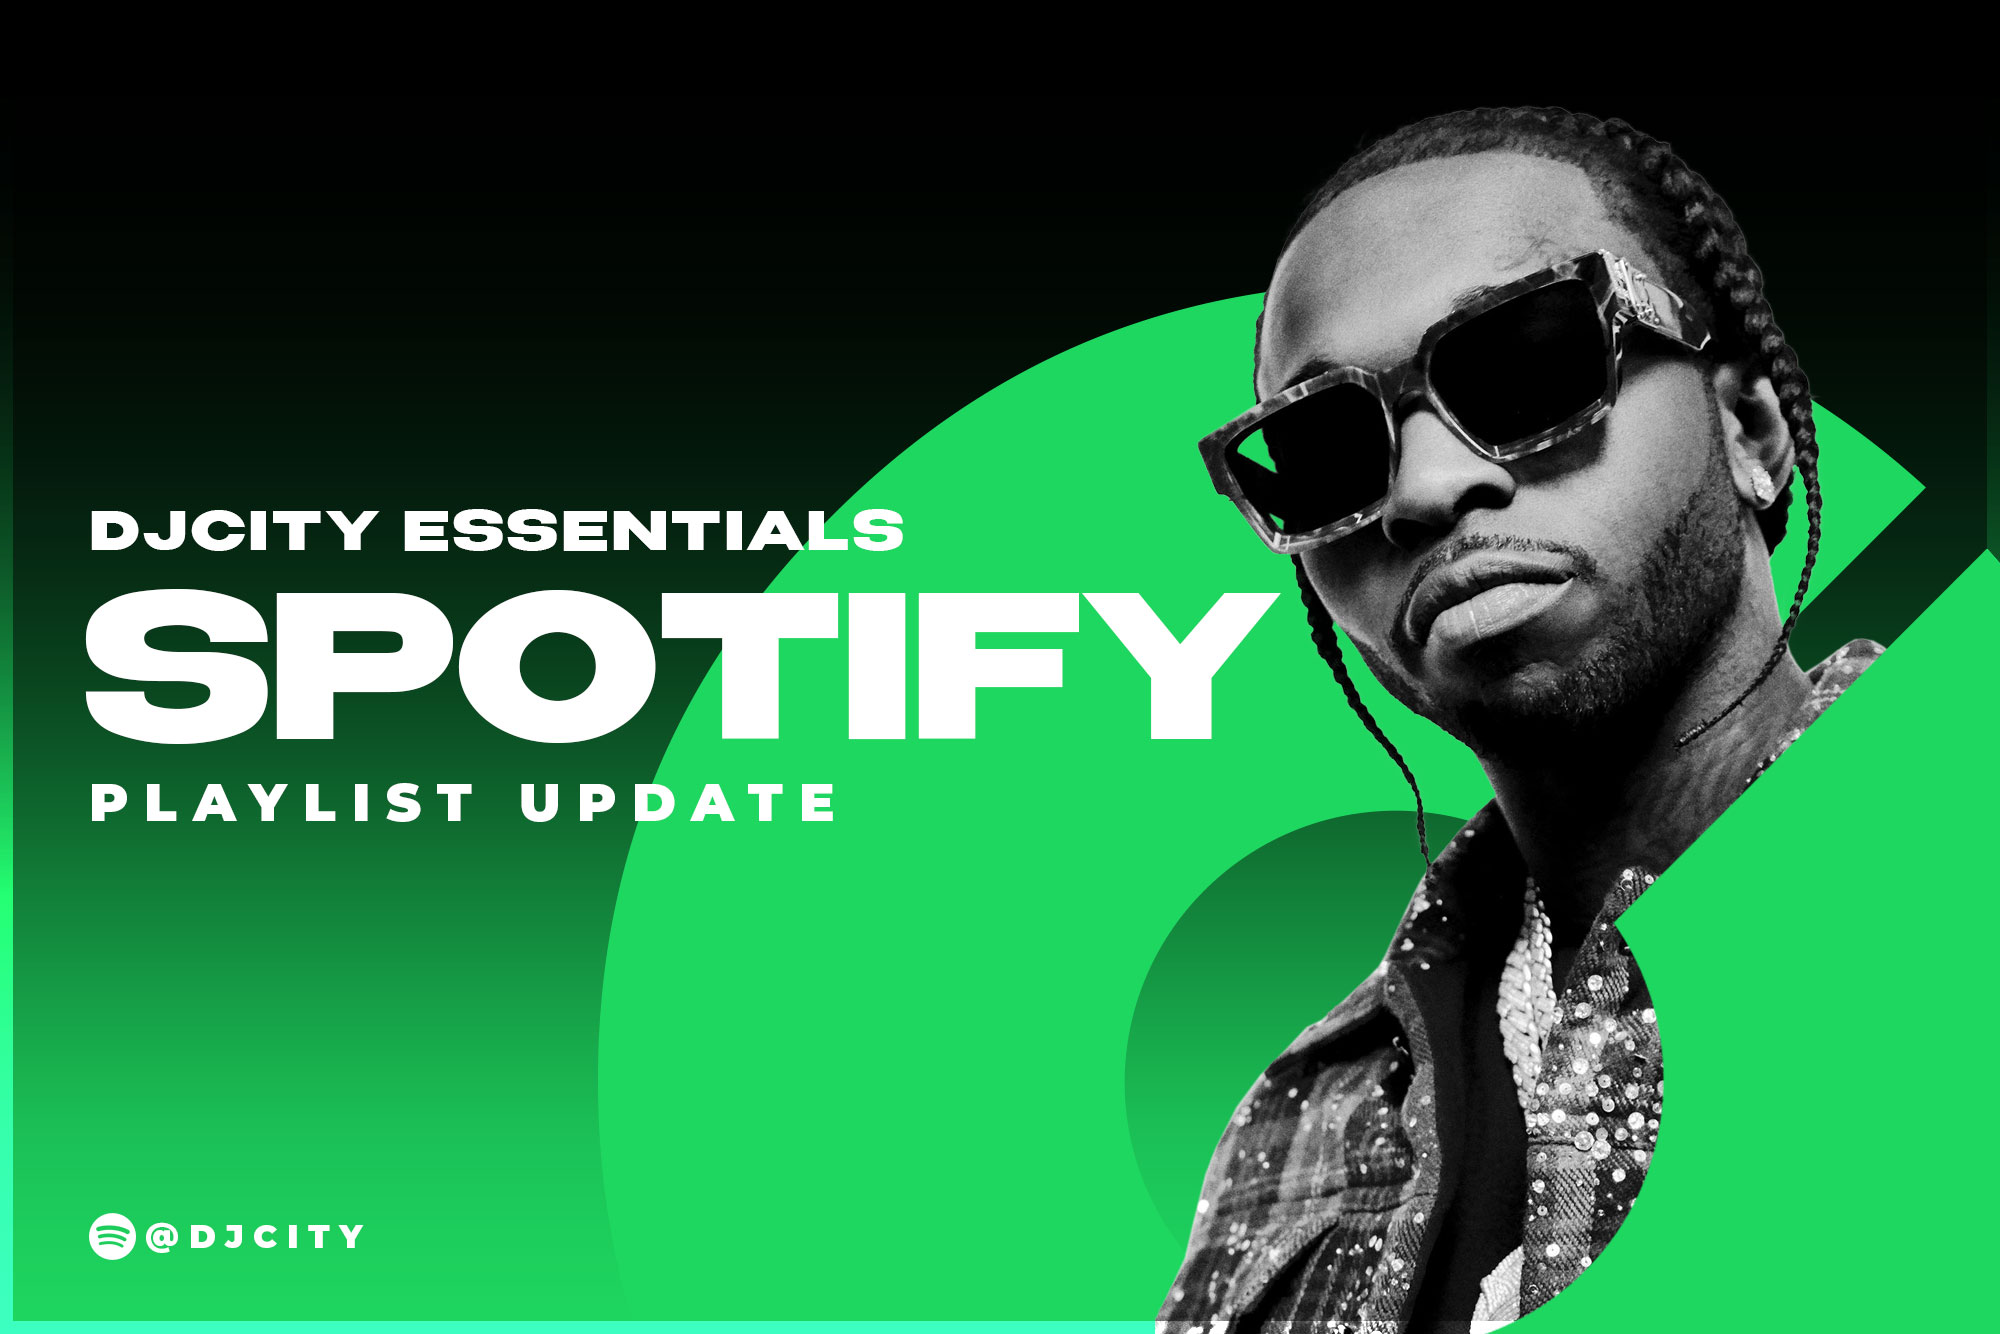 DJcity’s Spotify Playlist Update: Jul. 20